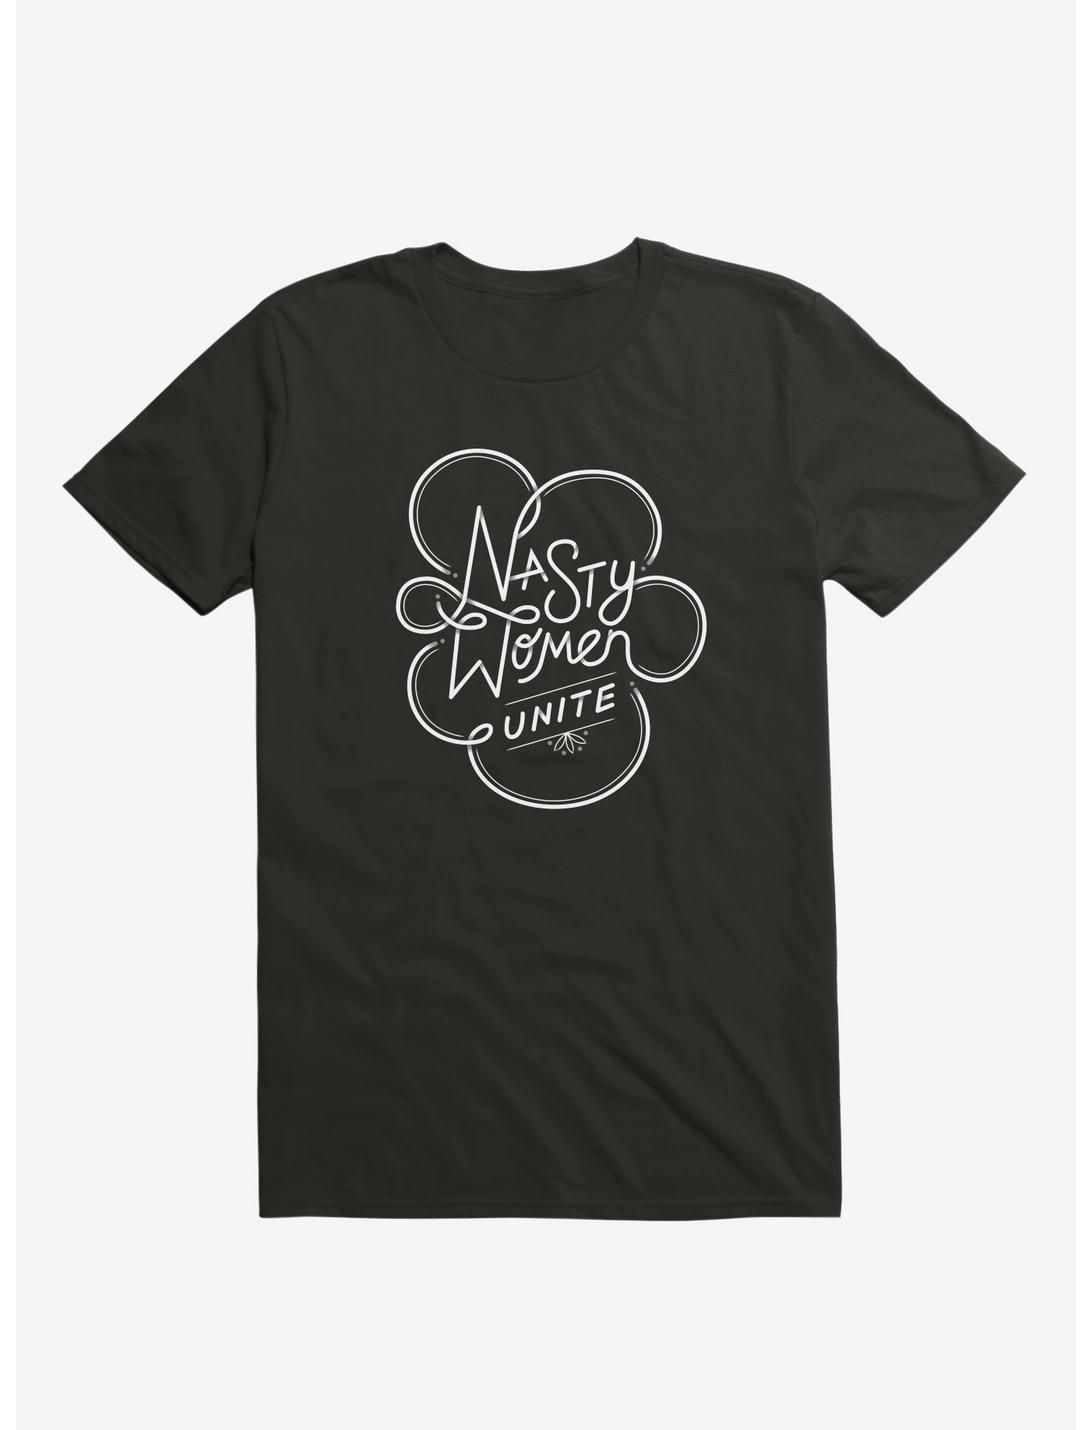 Nasty Women Unite T-Shirt, BLACK, hi-res